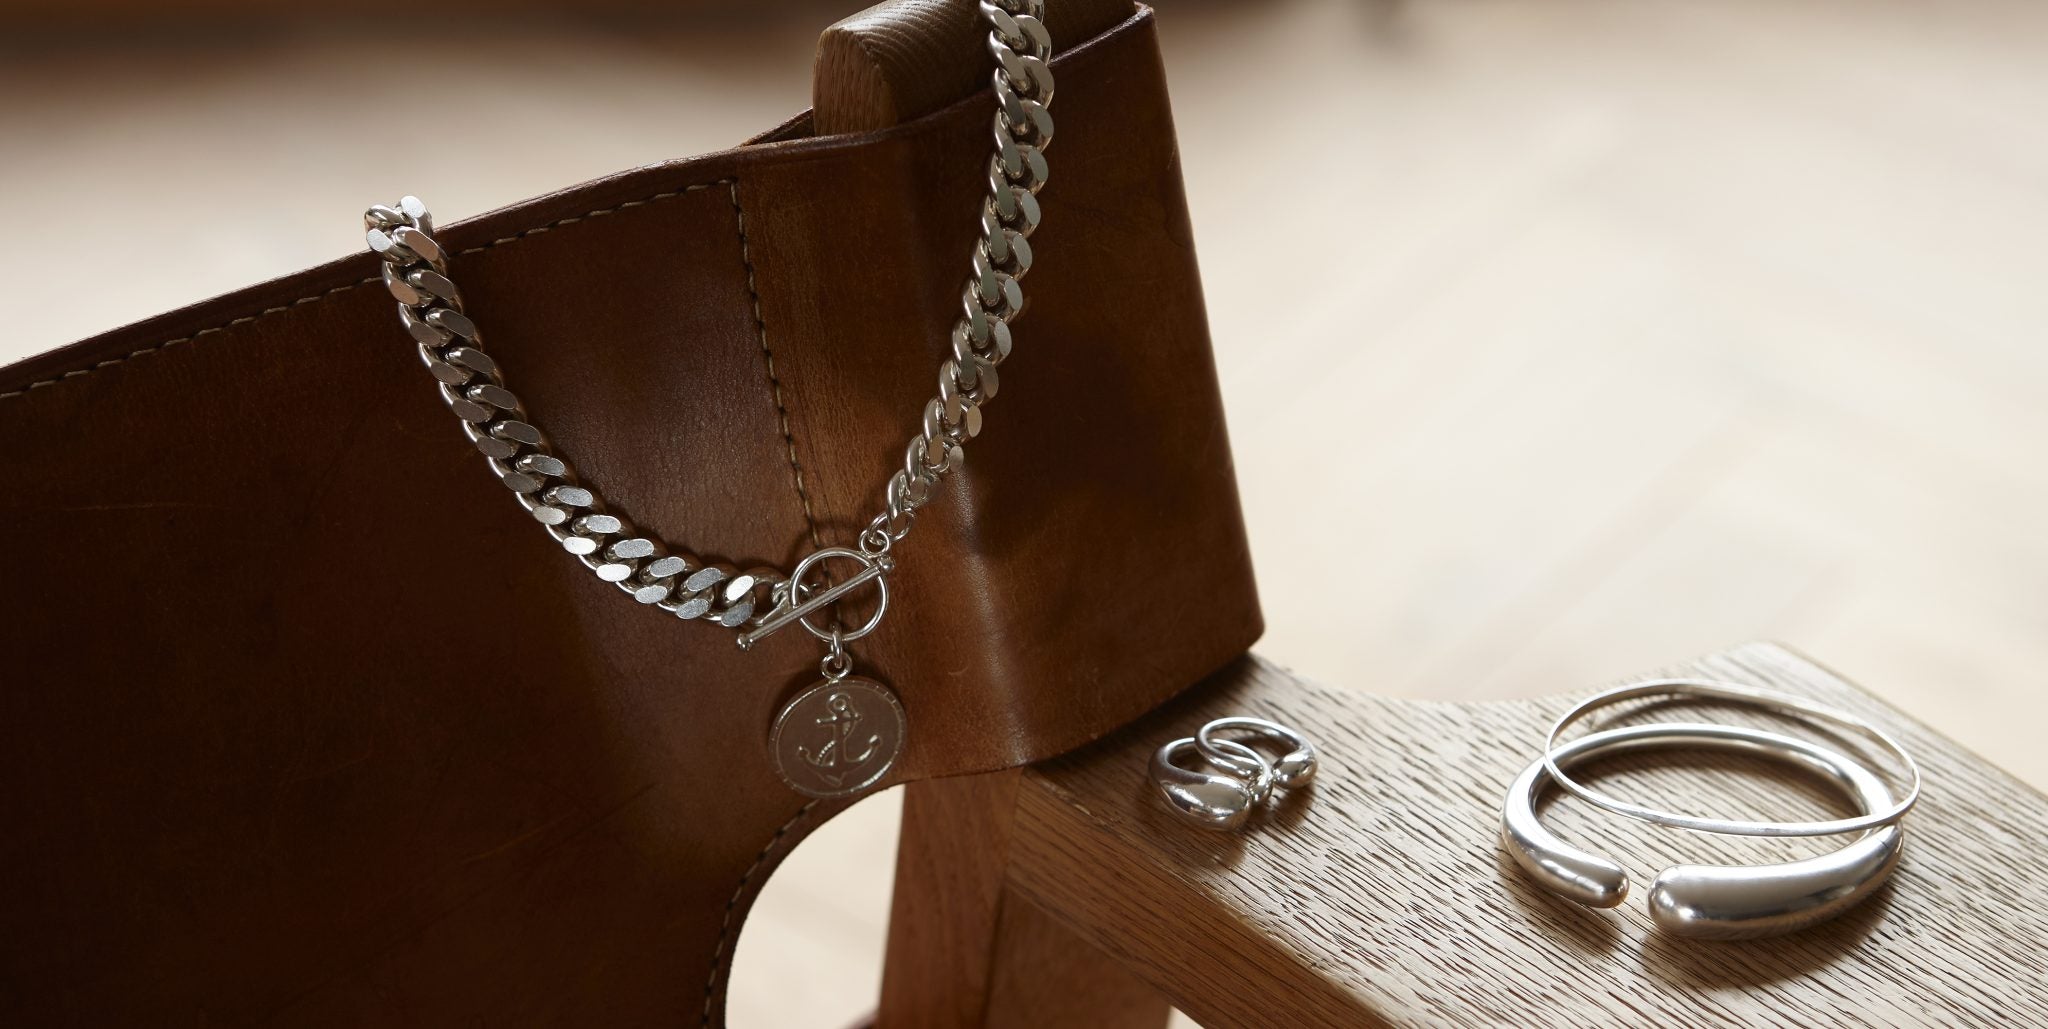 smykker | De flotteste sølvsmykker fra de bedste designere – The Jewellery Room